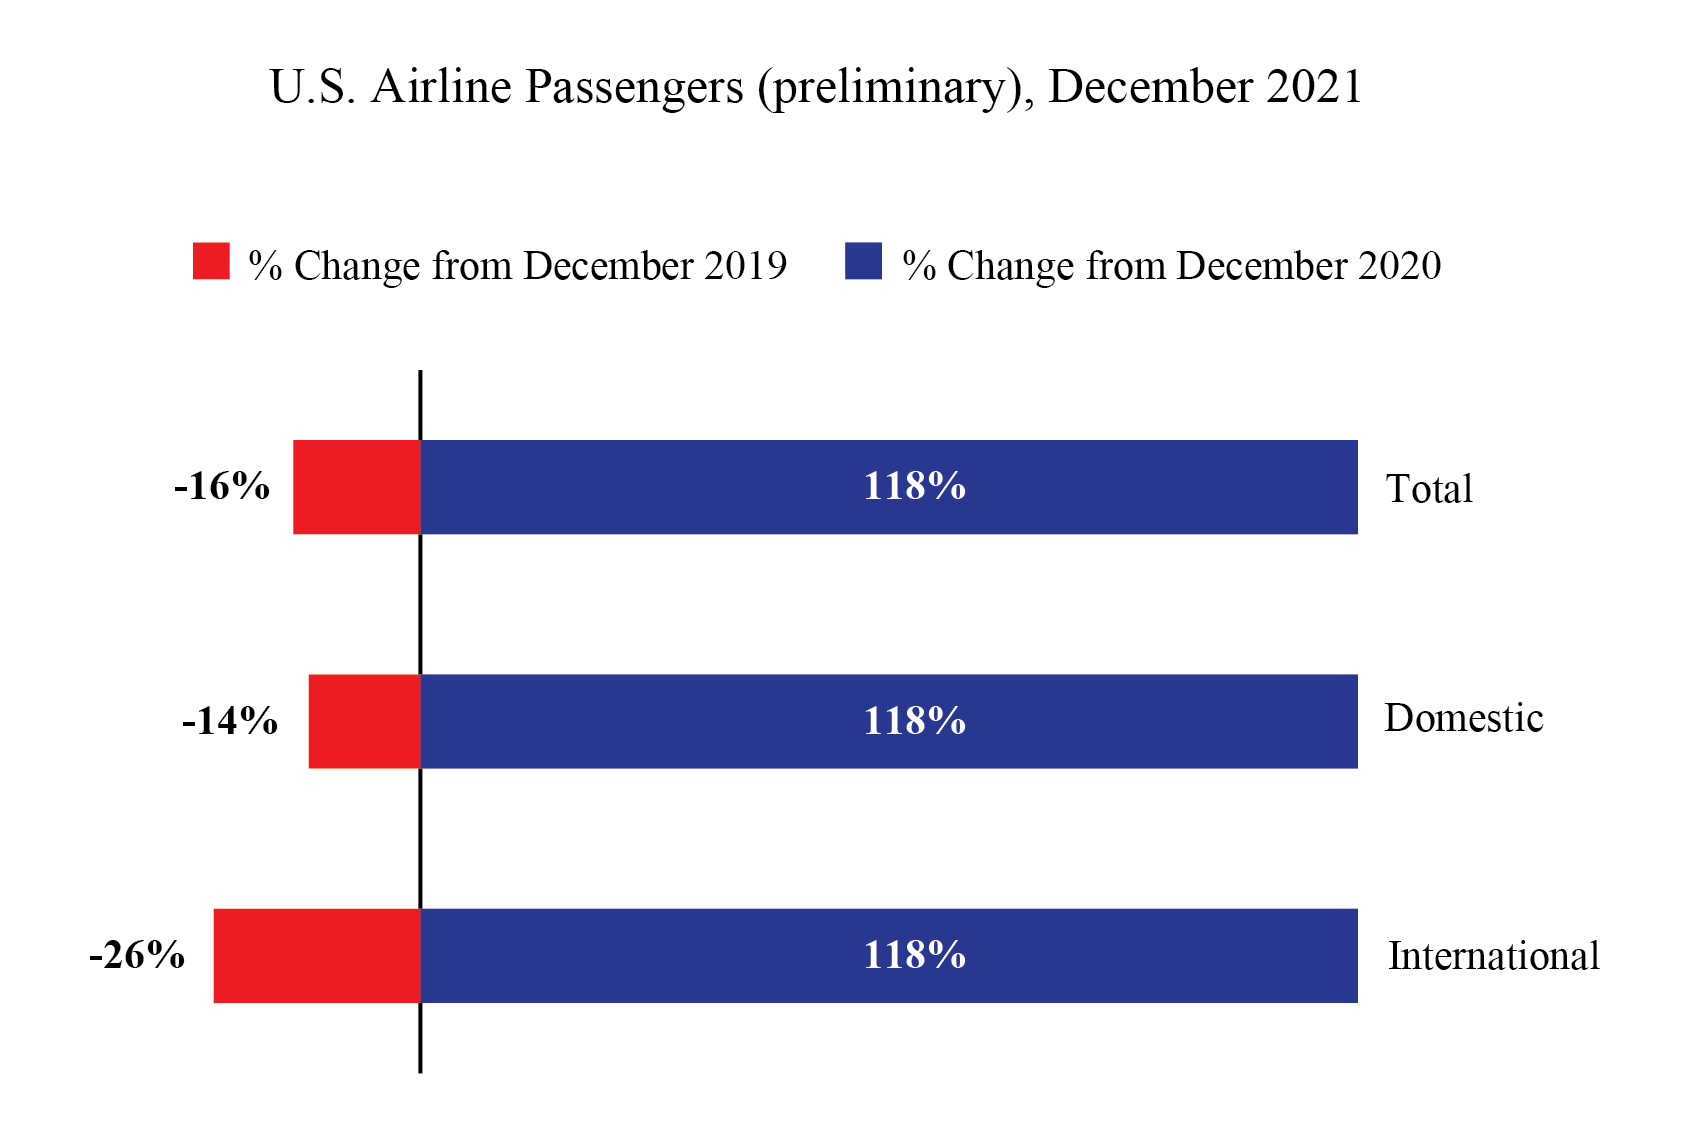 U.S. Airline Passengers (Preliminary), December 2021 (Bar Chart)